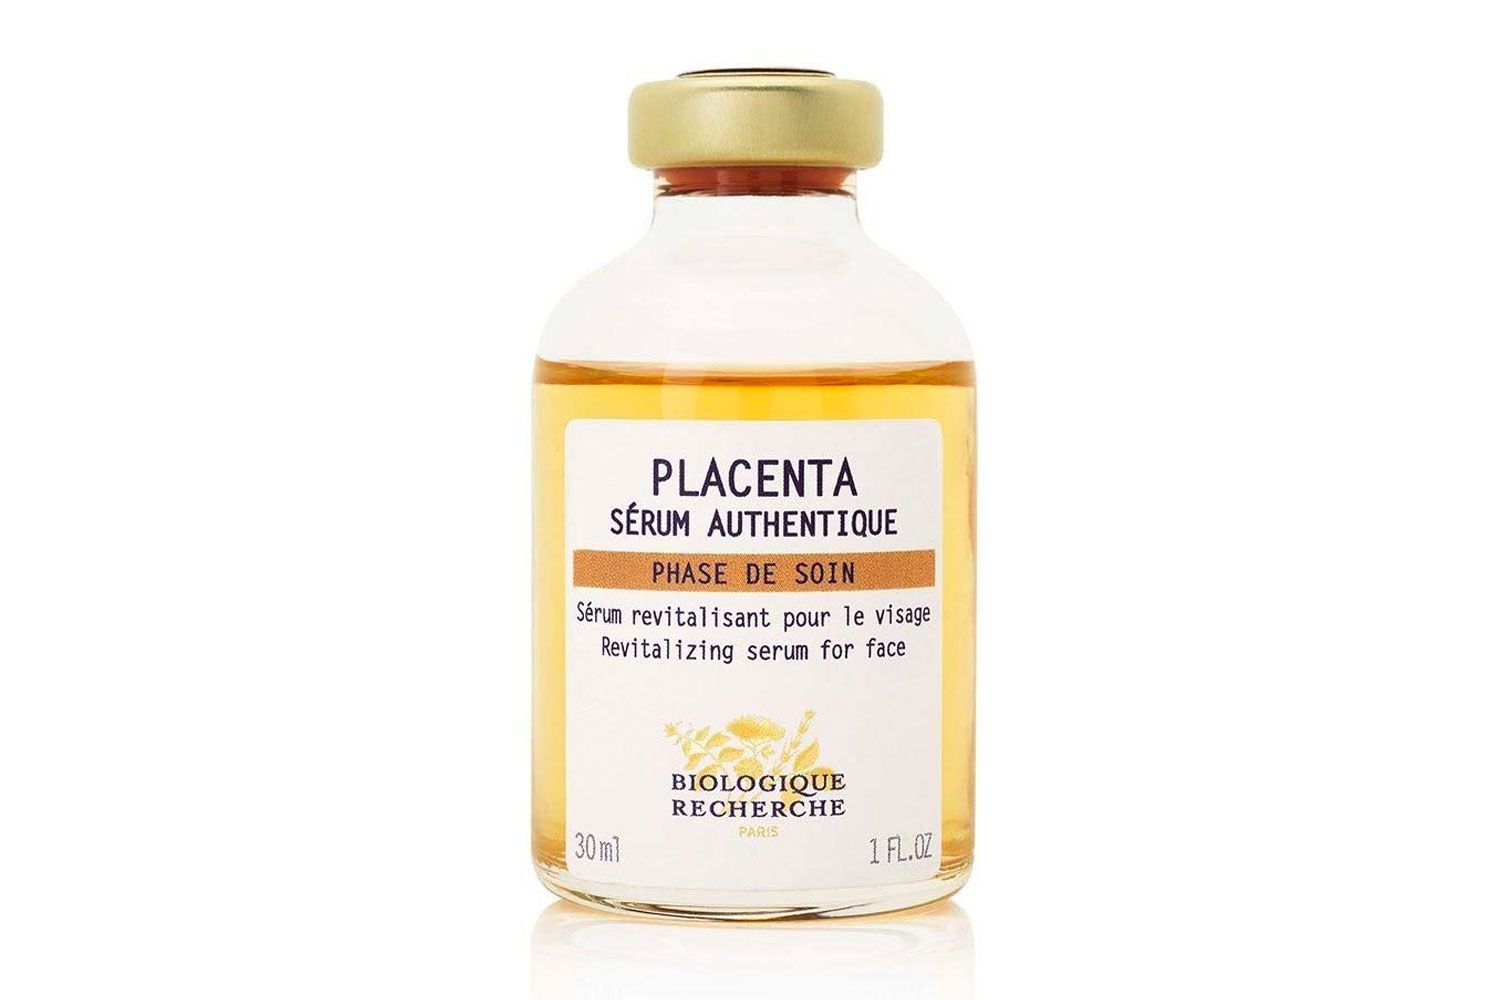 Soro Biologique Recherche com placenta